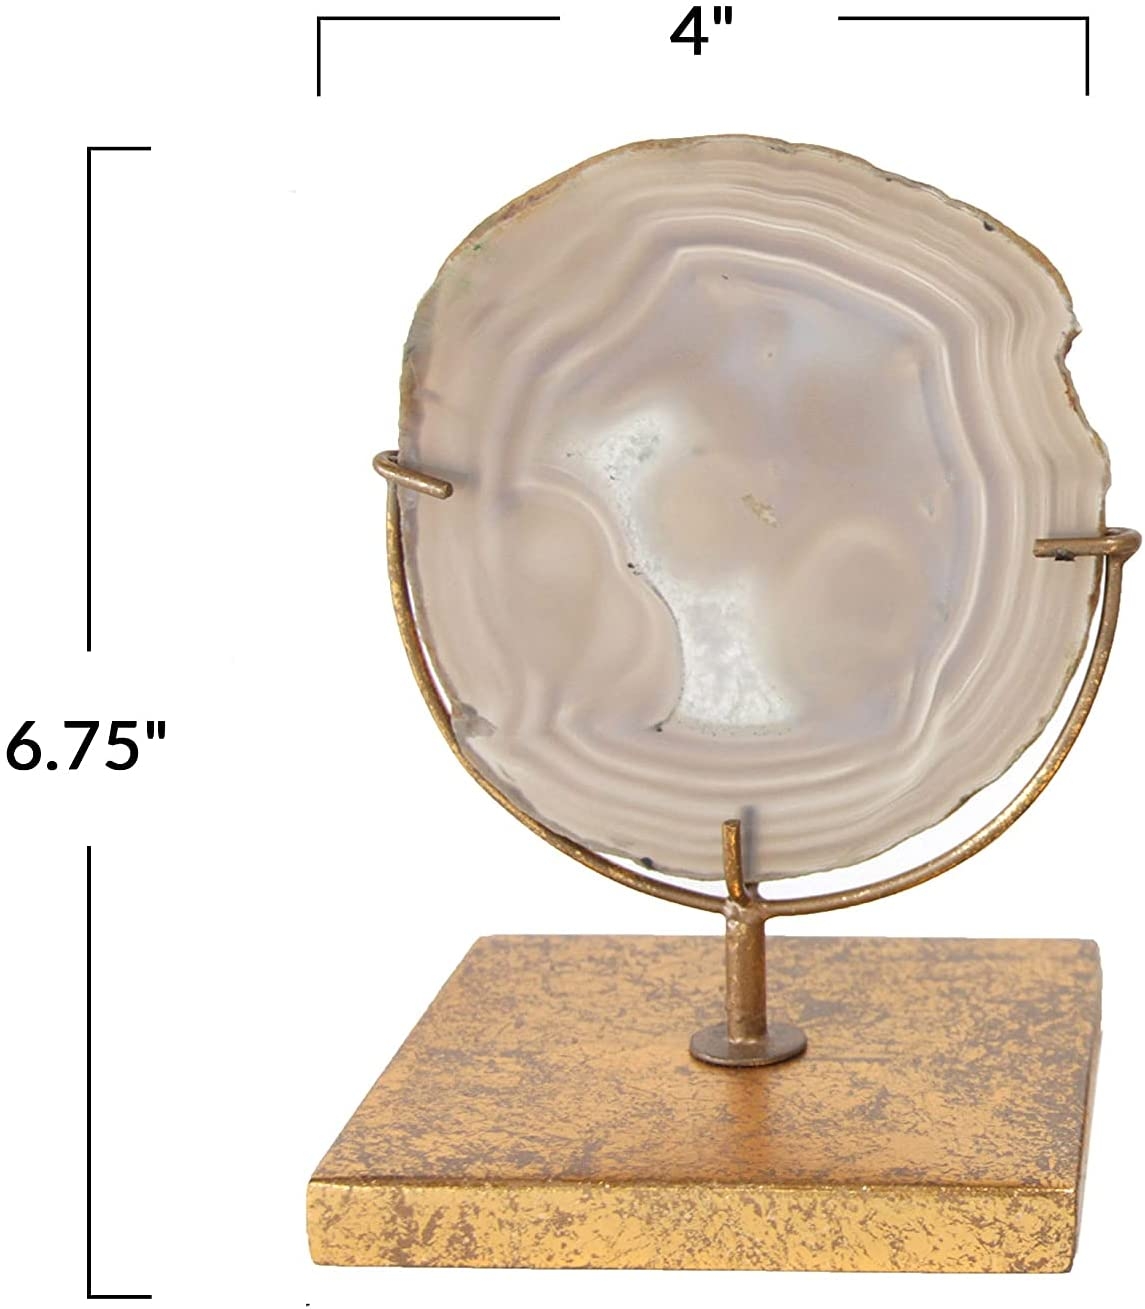 Decorative Agate Stone Slice on Metal Stand - Image 2